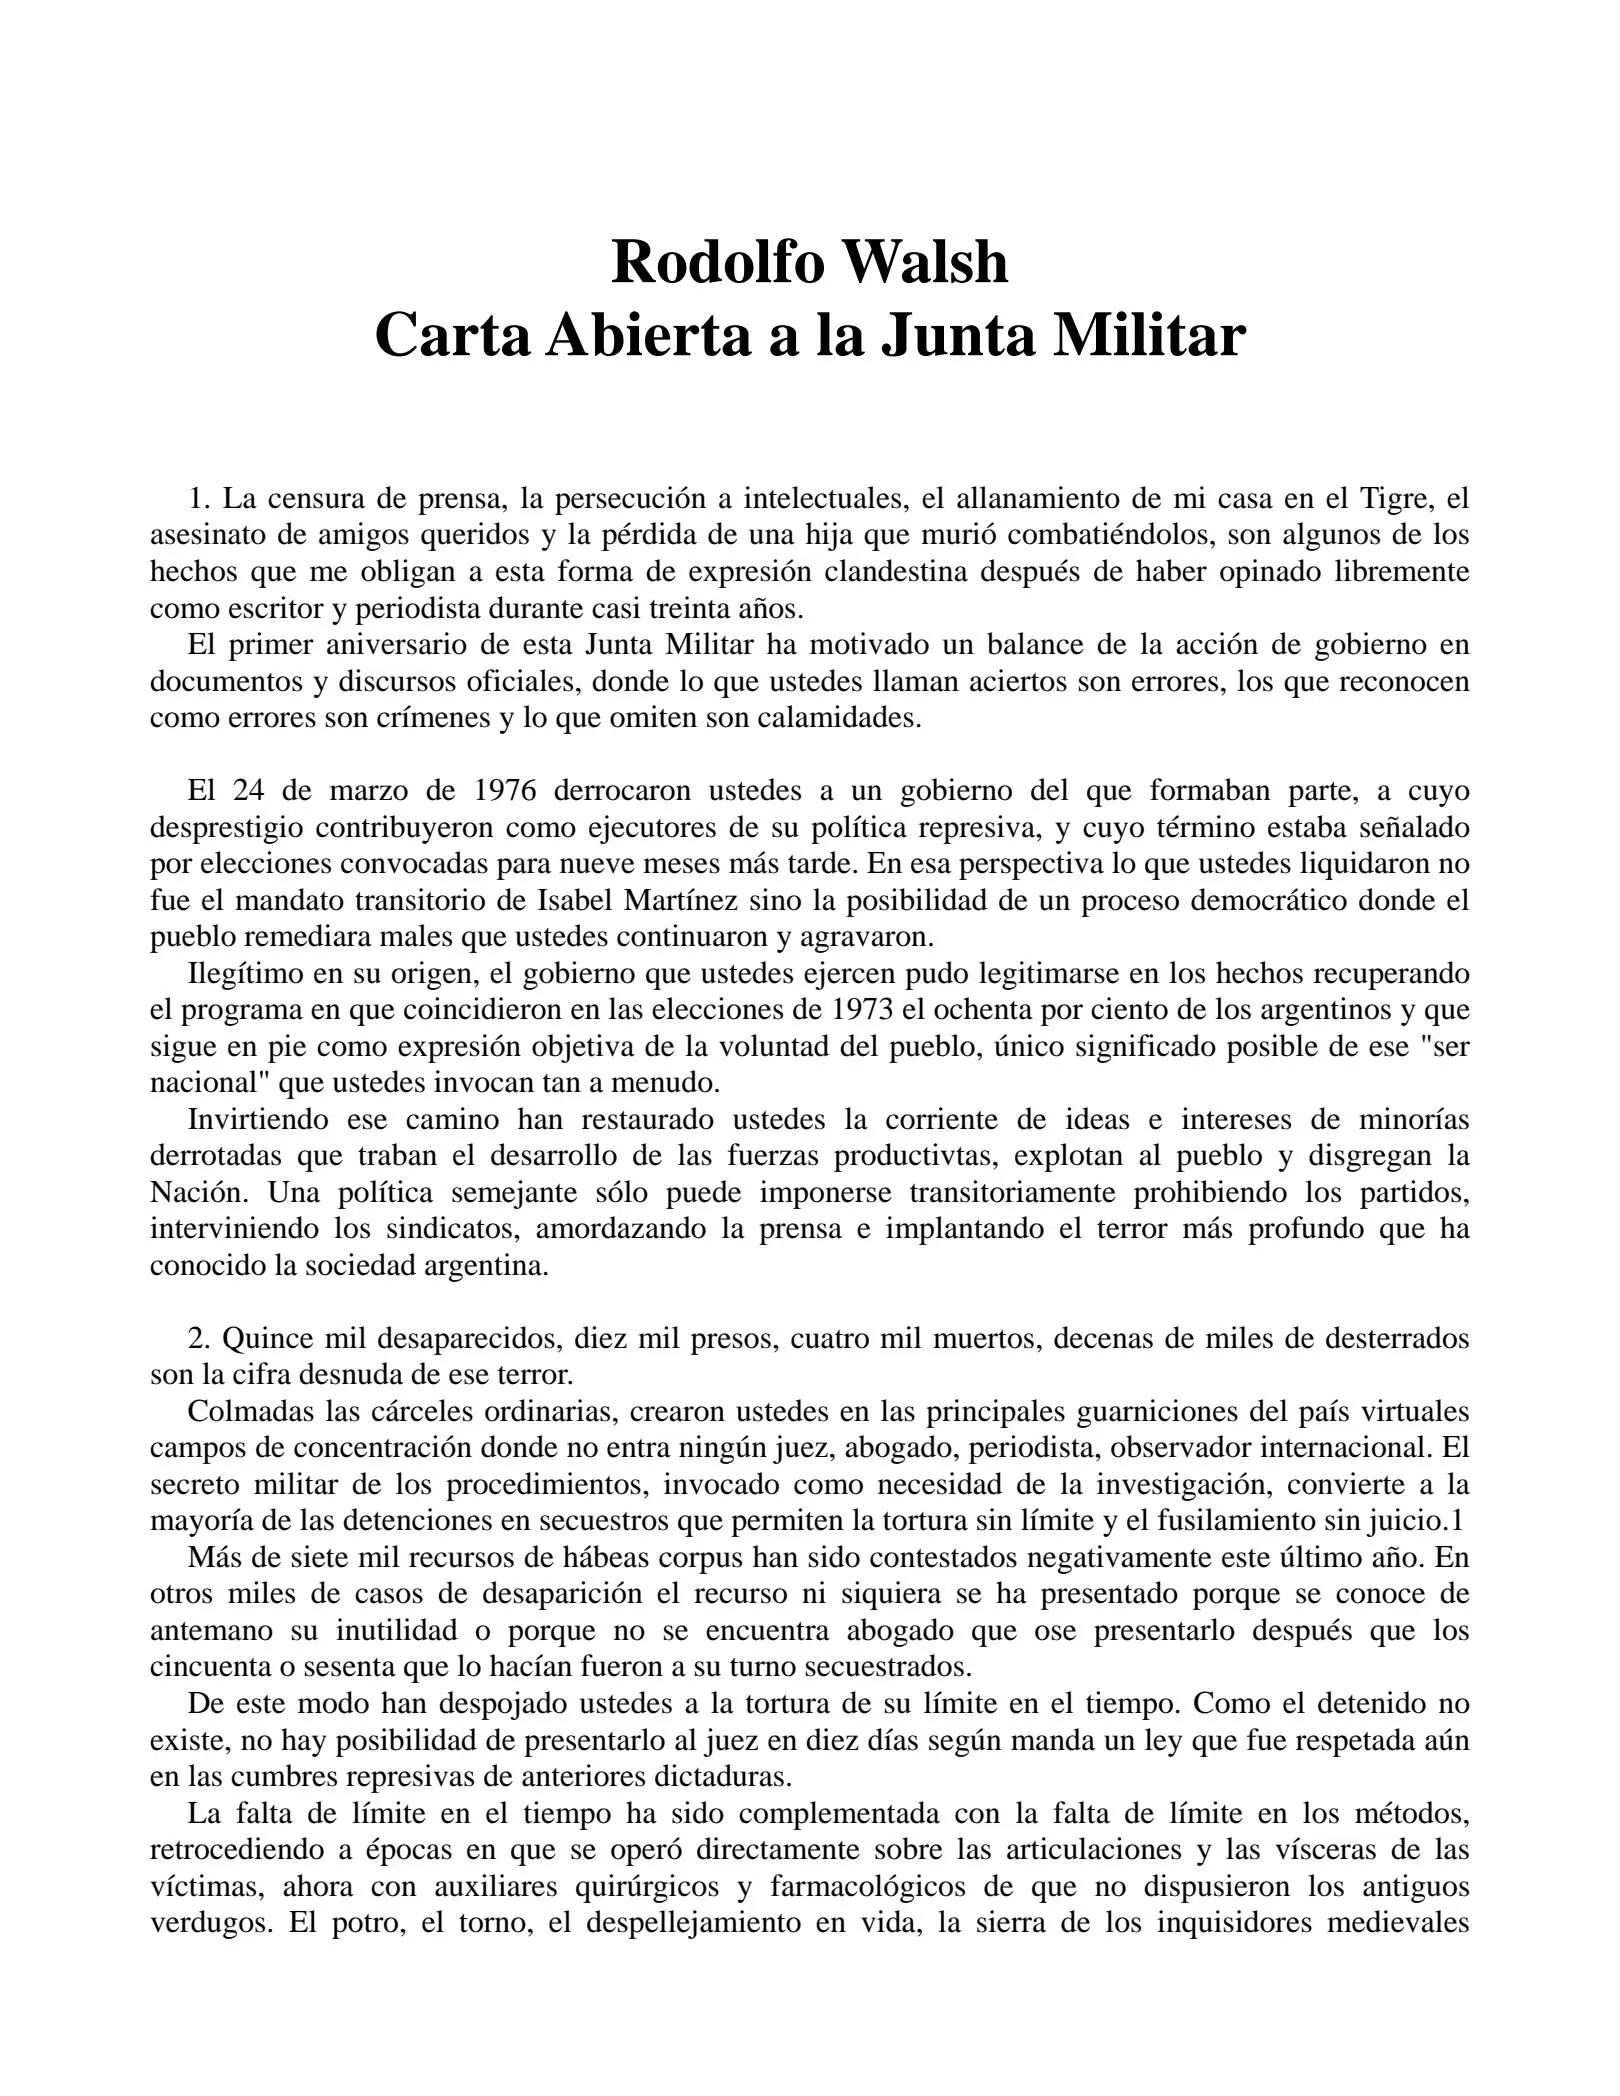 carta abierta a la junta militar ferrari - Qué escritor a escribió la Carta abierta a la Junta Militar dirigida al gobierno de facto de Jorge Rafael Videla